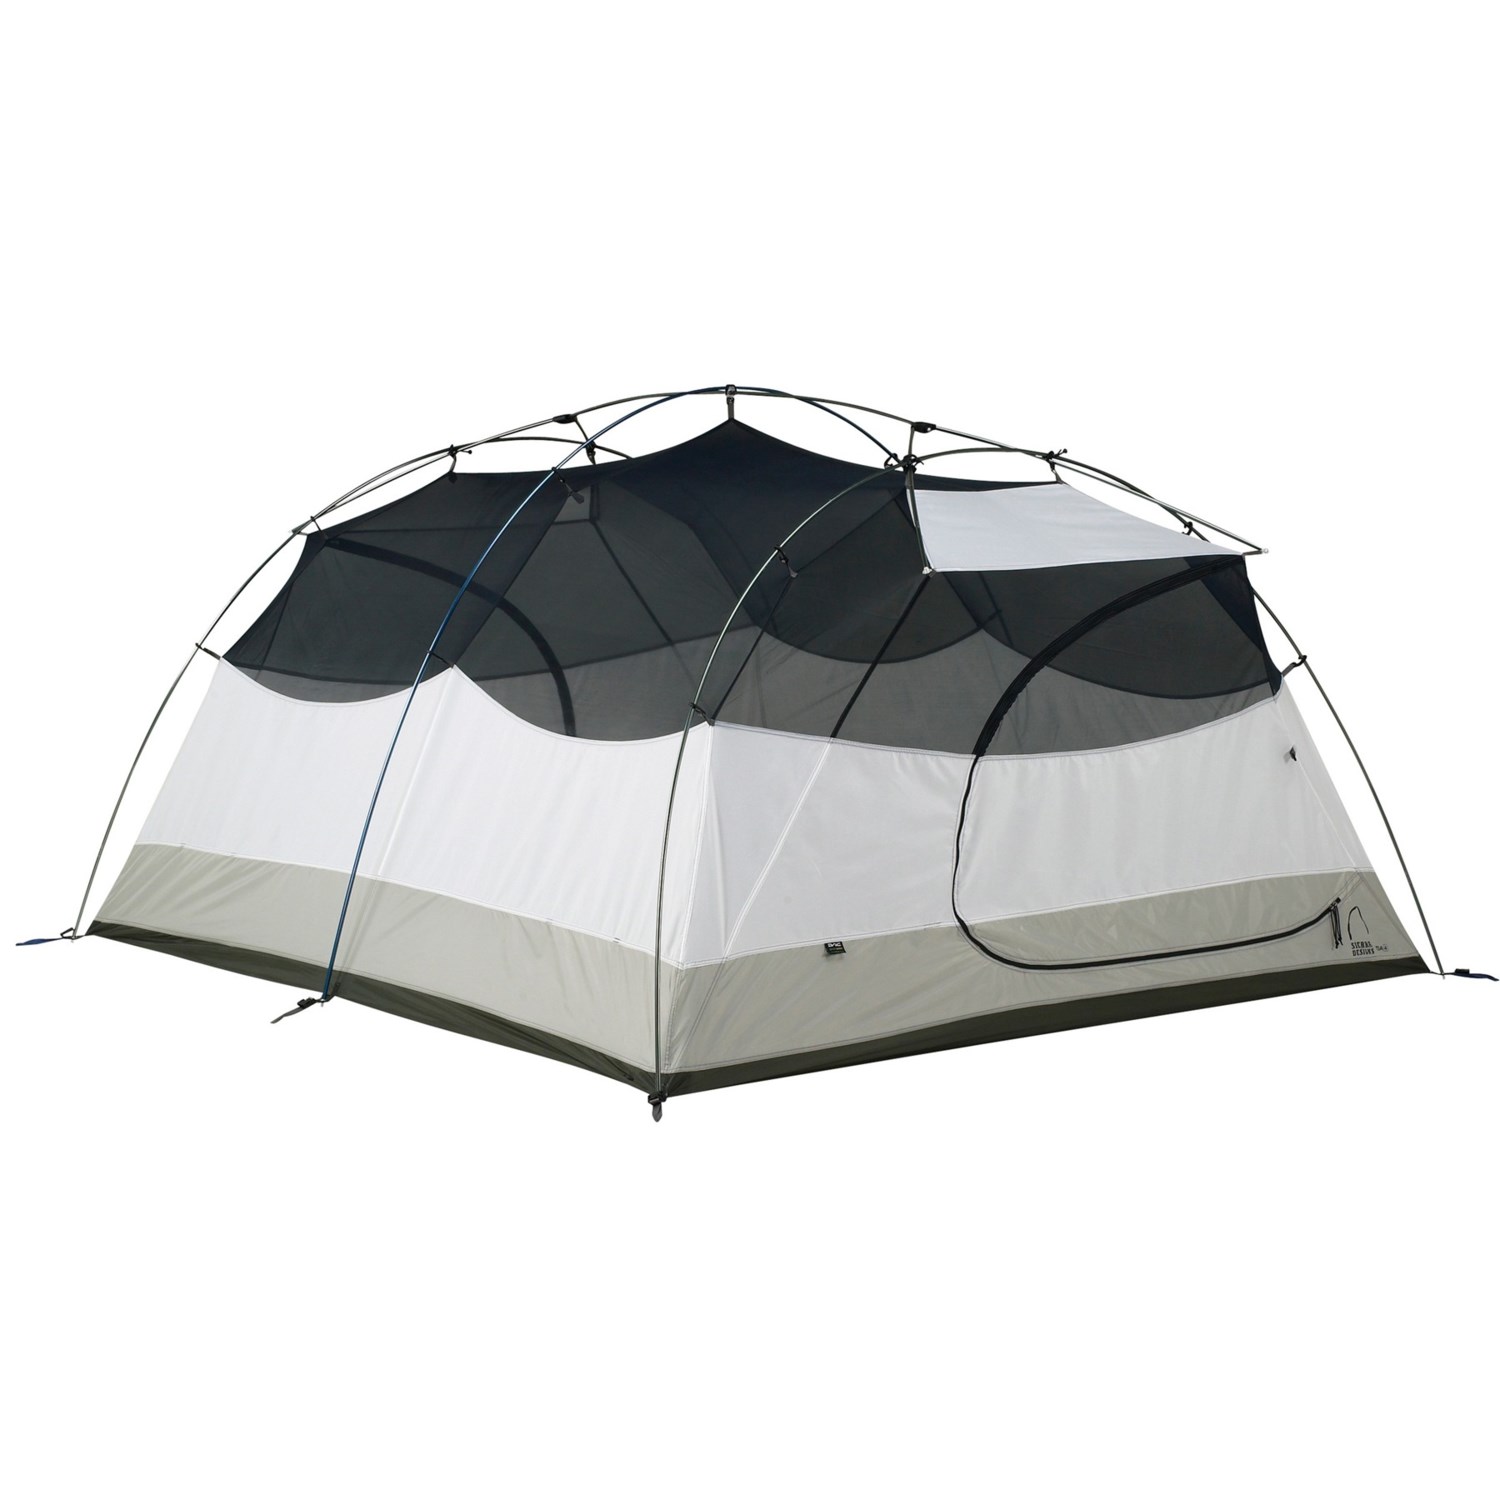 Sierra Designs Zia 4 Tent with Footprint and Gear Loft   4 Person, 3 Season 7063D 25